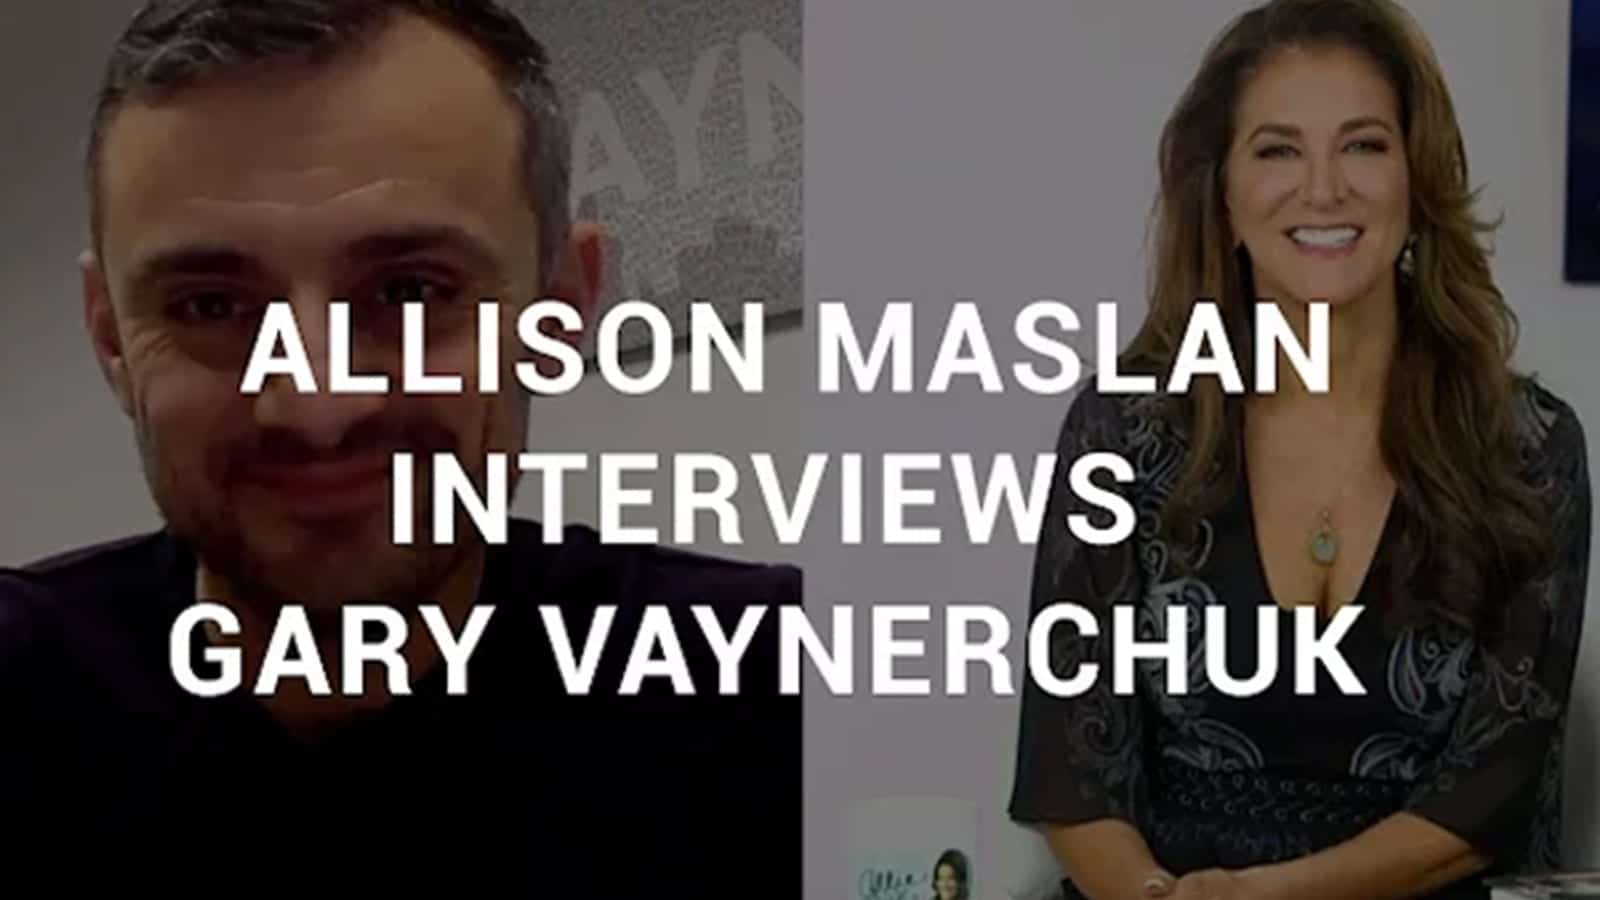 Allison Maslan and Gary Vanynerchuk